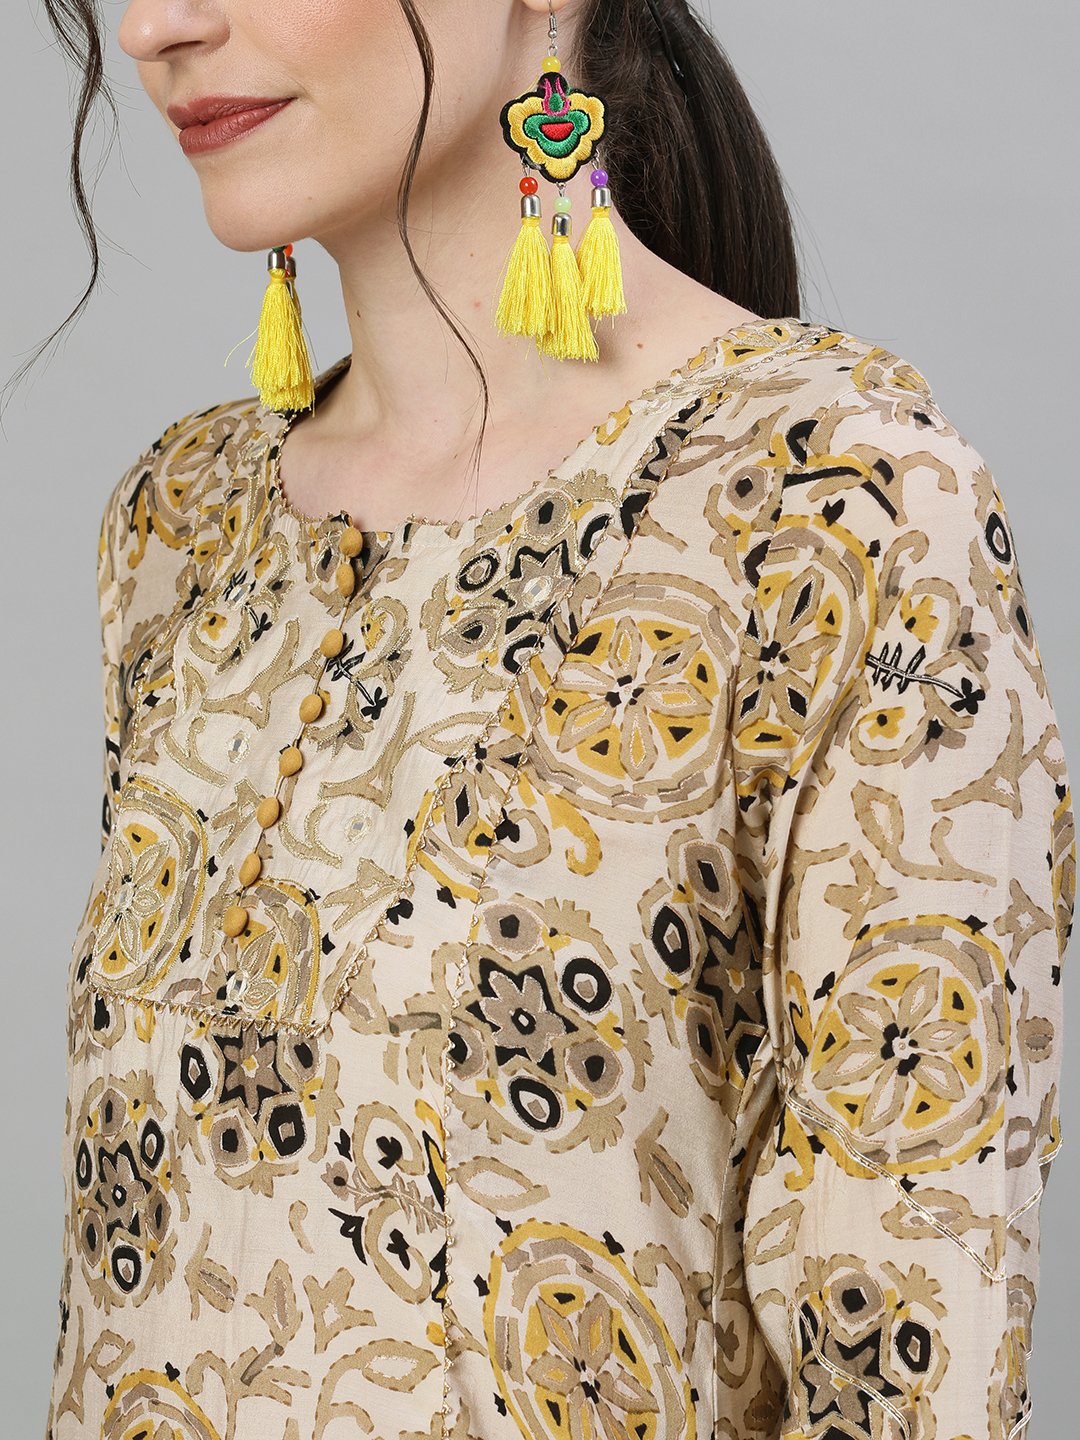 Ishin Women's Rayon Off White & Mustard Zari Embellished A-Line Kurta Sharara Dupatta Set